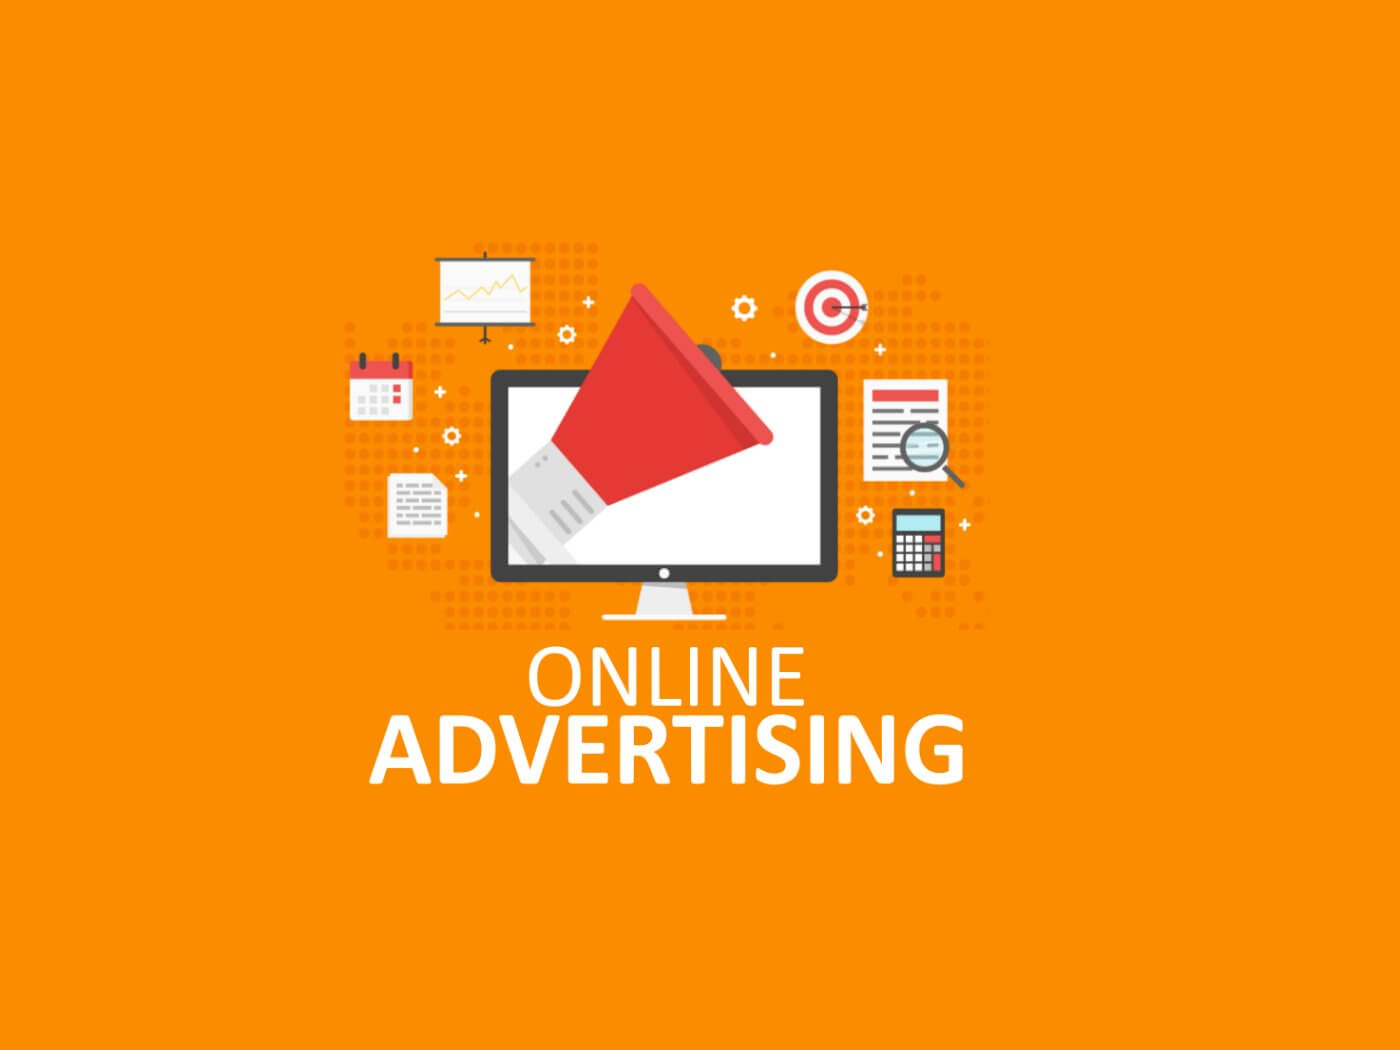 online advertising dissertations